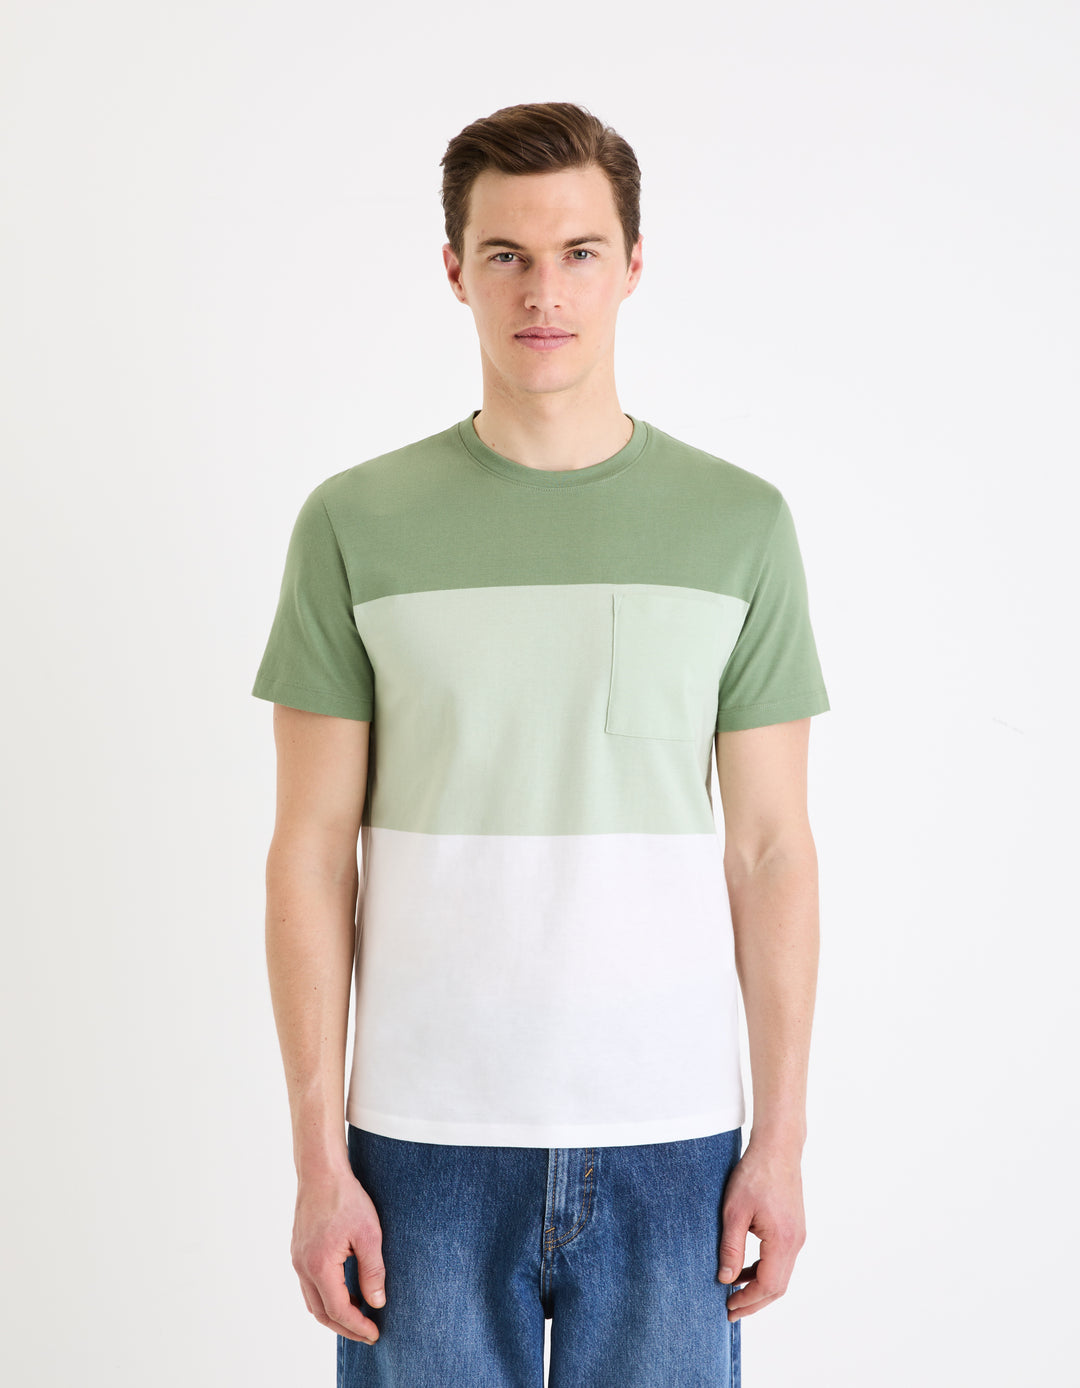 Unisex - Knitted - T-Shirt - Short sleeves - U / V / round neck